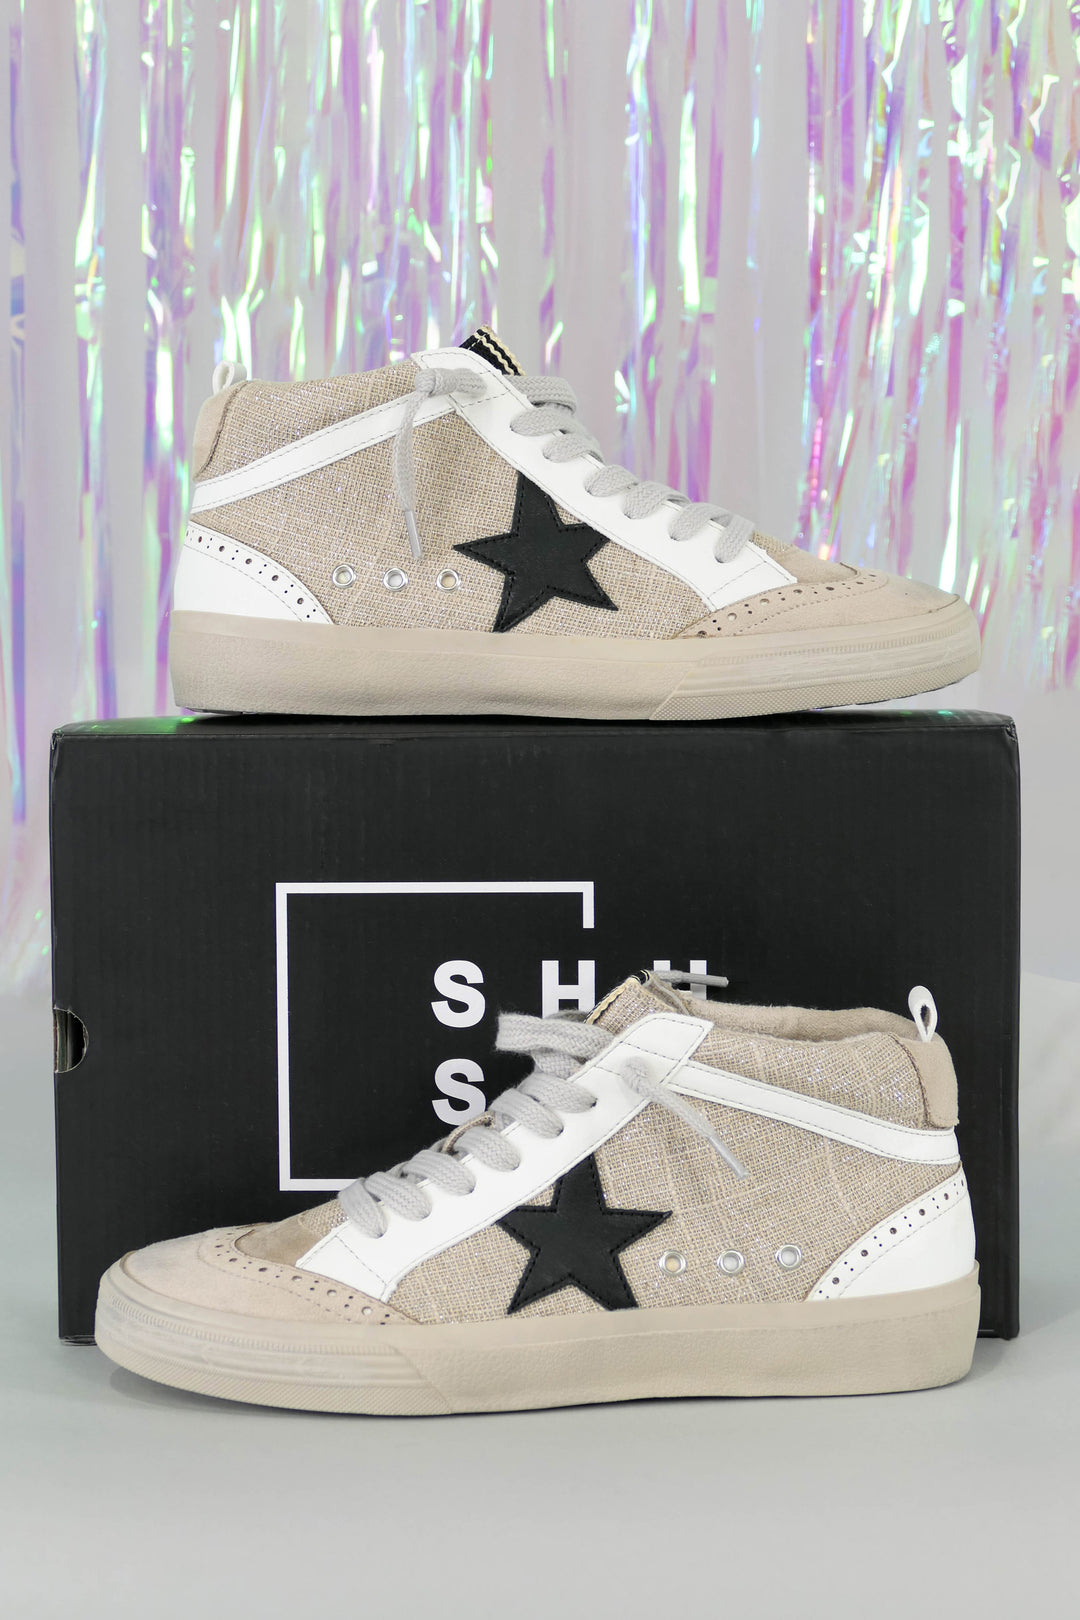 Shu Shop - Paulina Beige Canvas Hi Top Sneakers